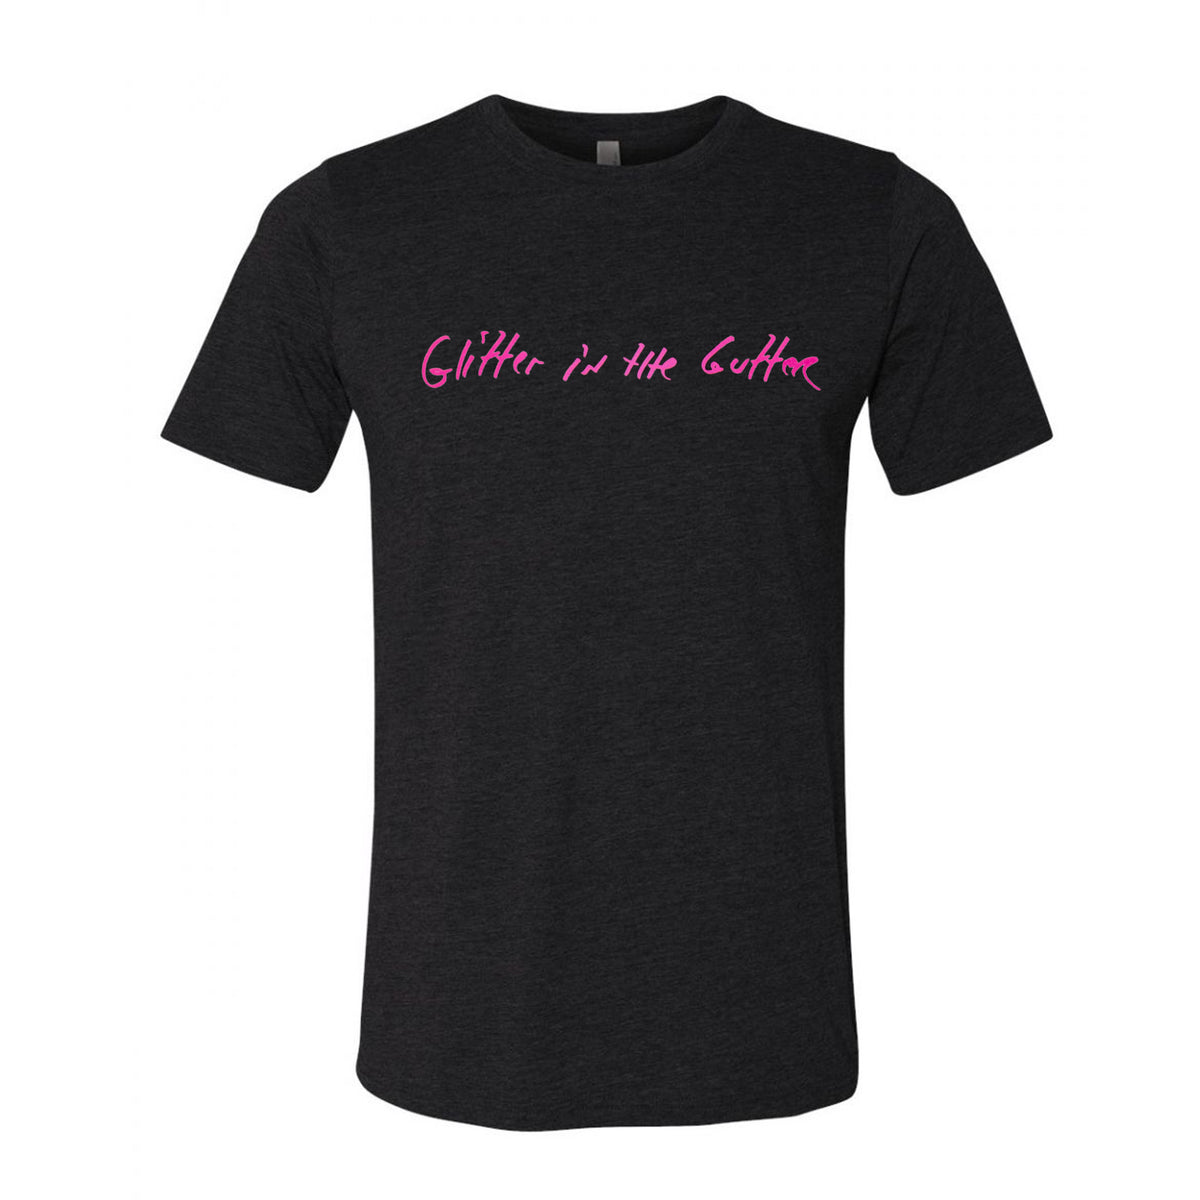 T-Shirt, Jesse Malin, Glitter in the Gutter design